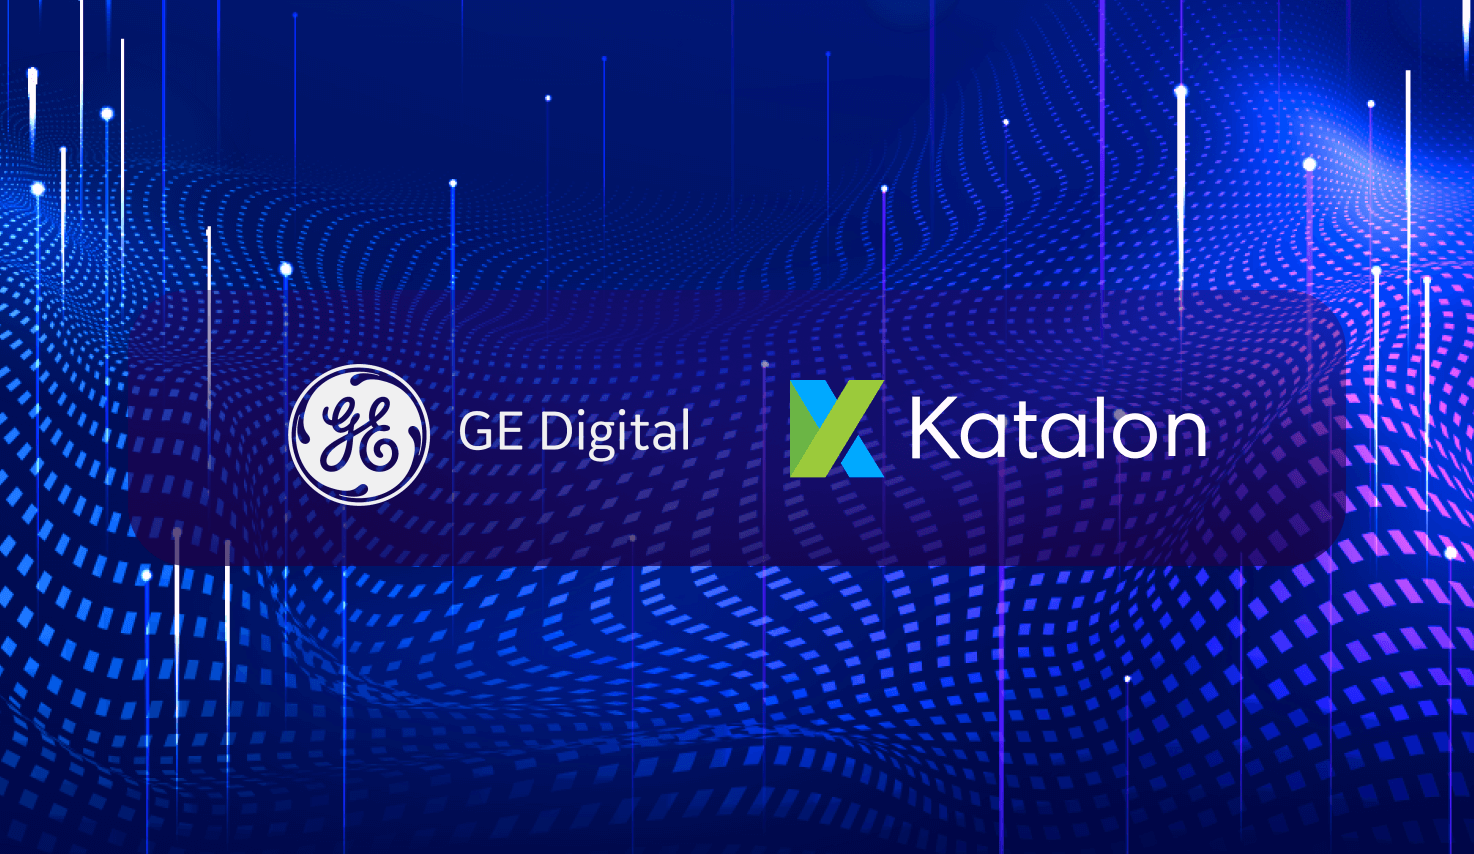 Katalon Sponsored the GE Digital Grid Customer Conference - Orchestrate 2022